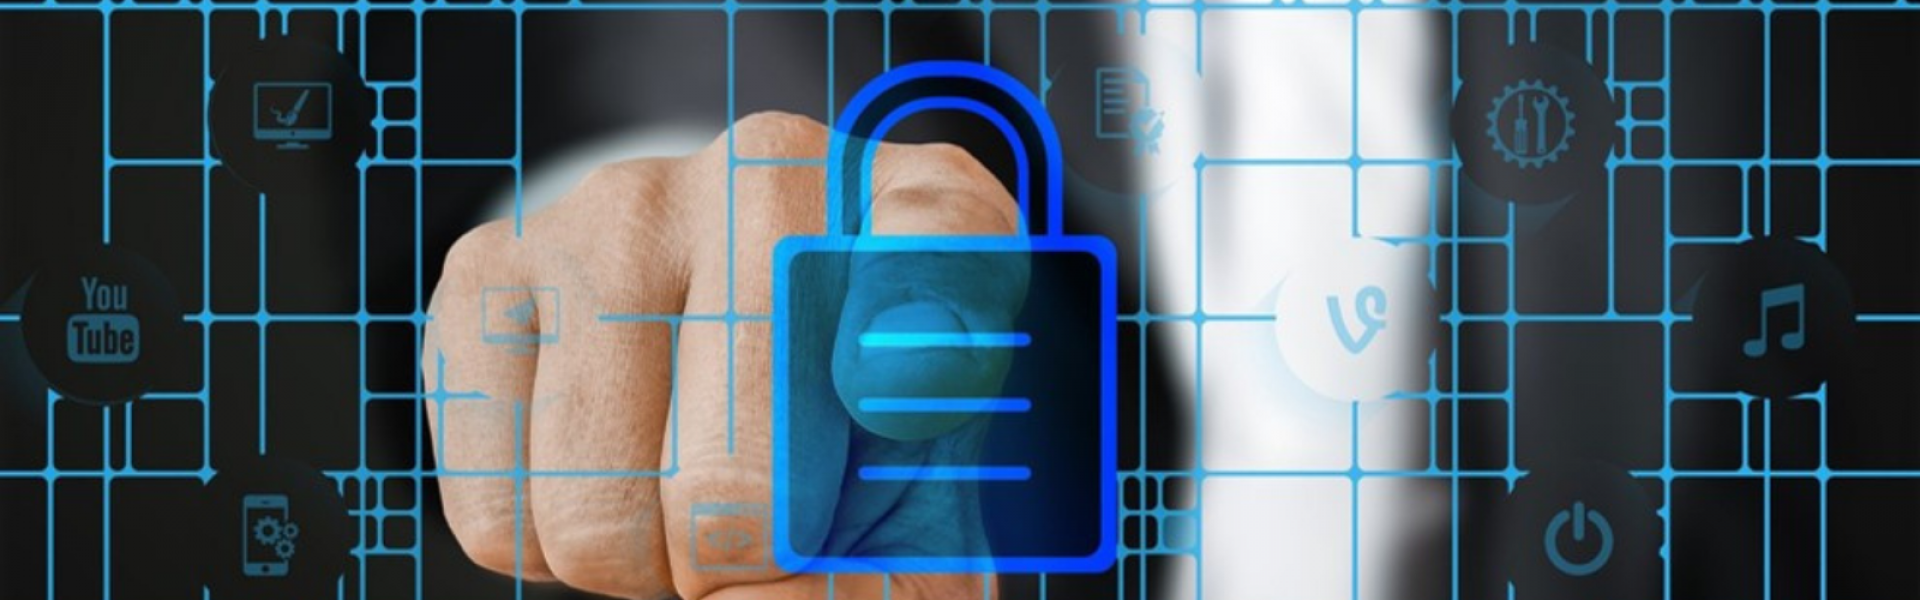 Infra - Protection des données via Microsoft Azure Information Protection